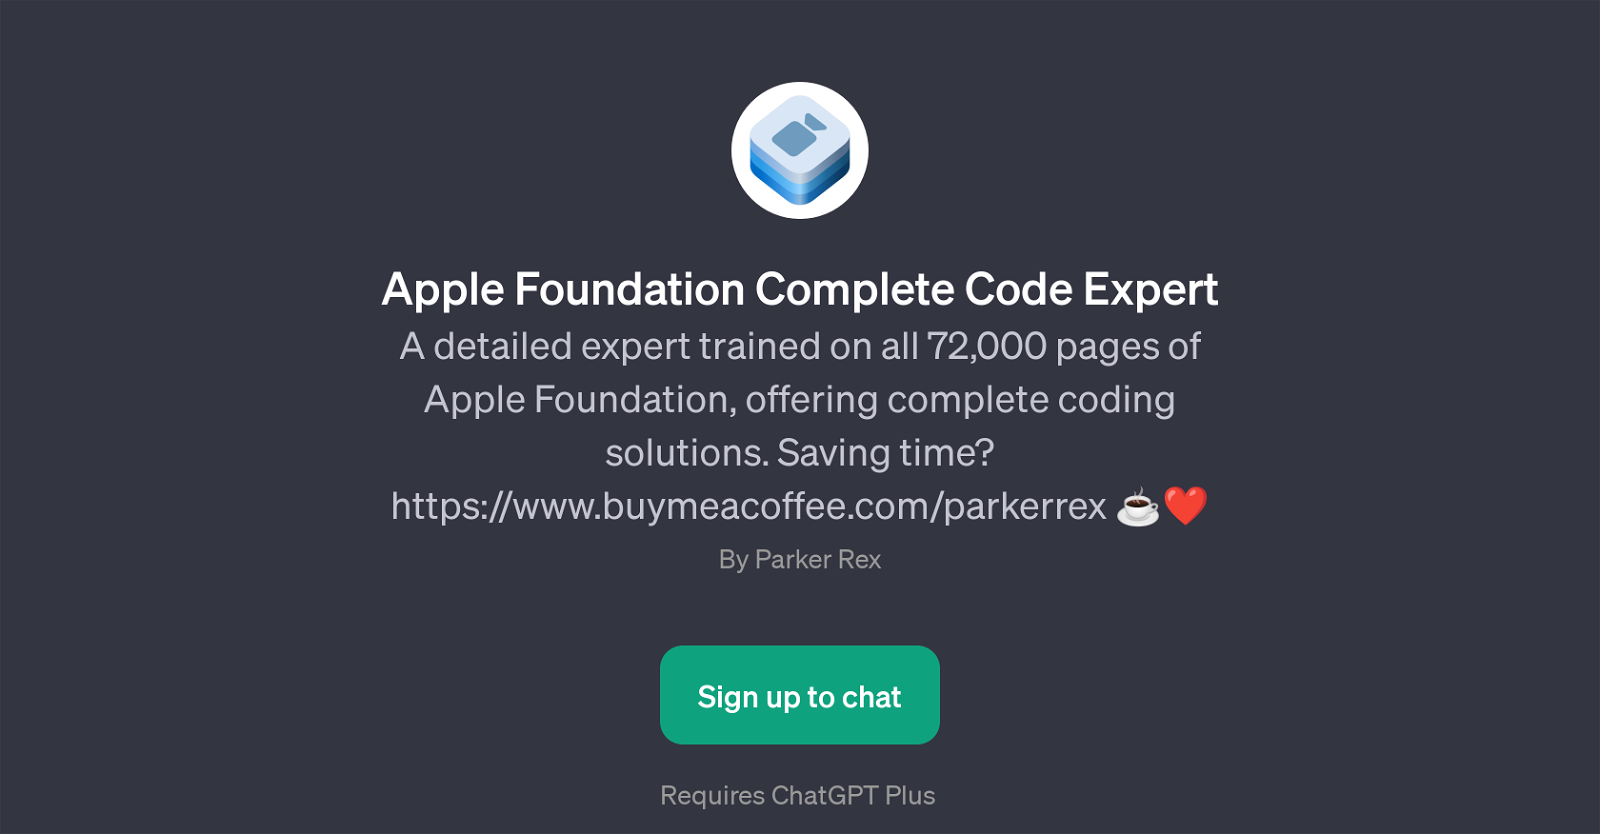 Apple Foundation Complete Code Expert website